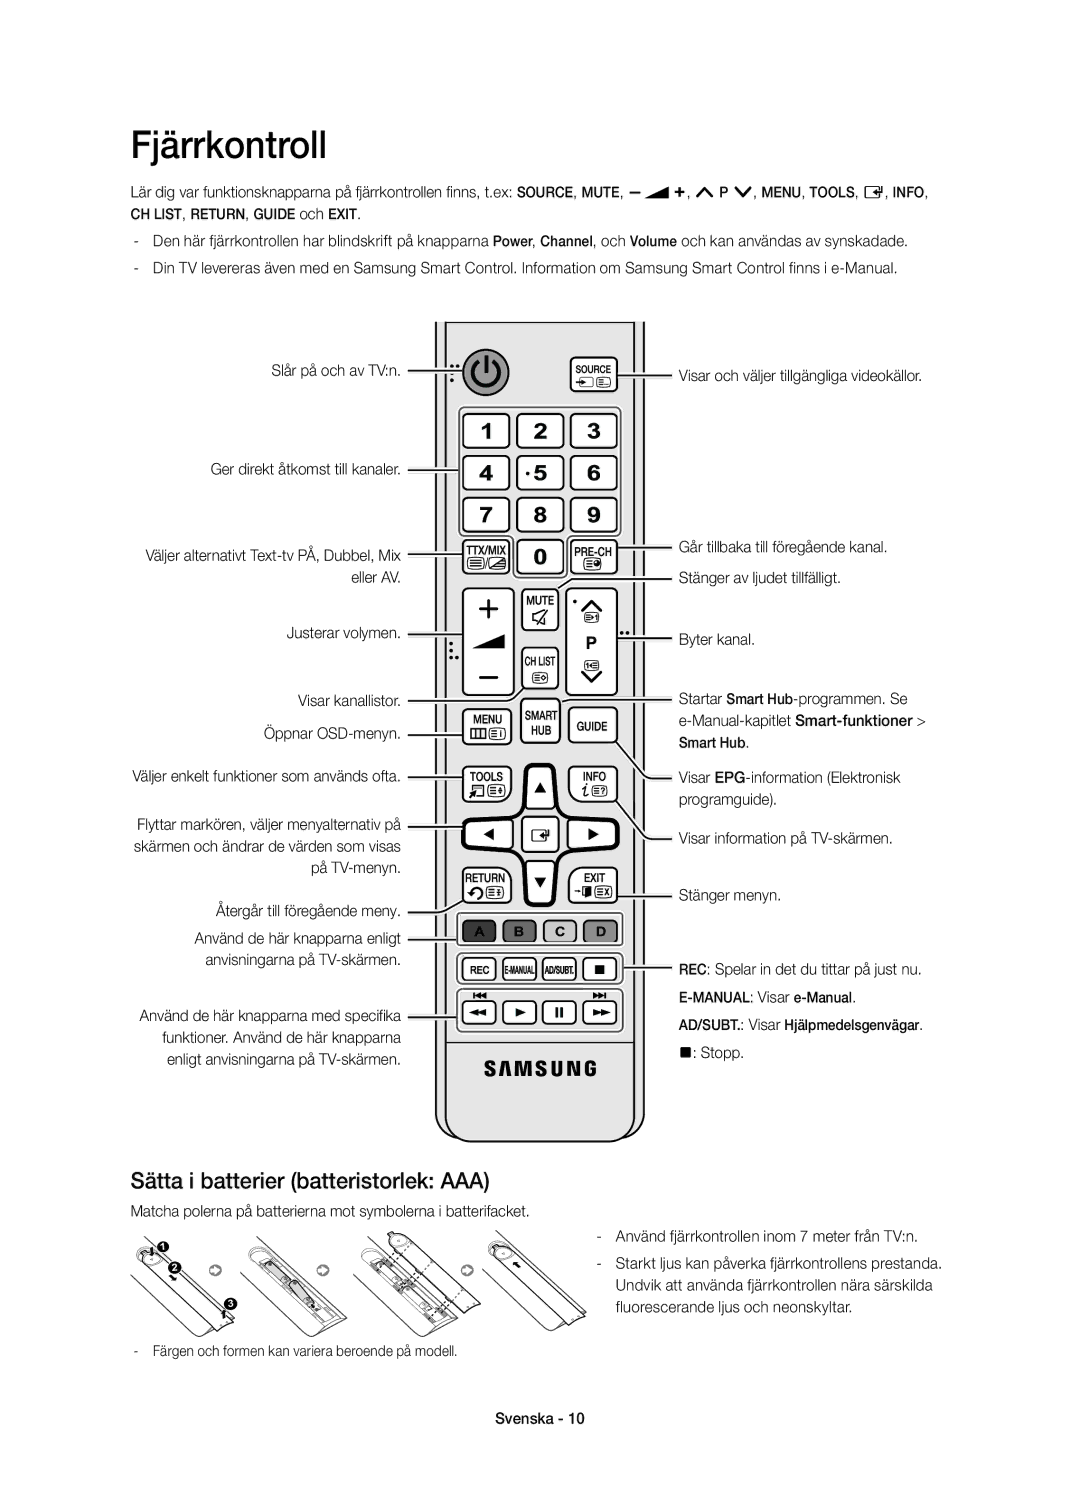 Samsung UE85HU7505TXXE manual Sätta i batterier batteristorlek AAA 